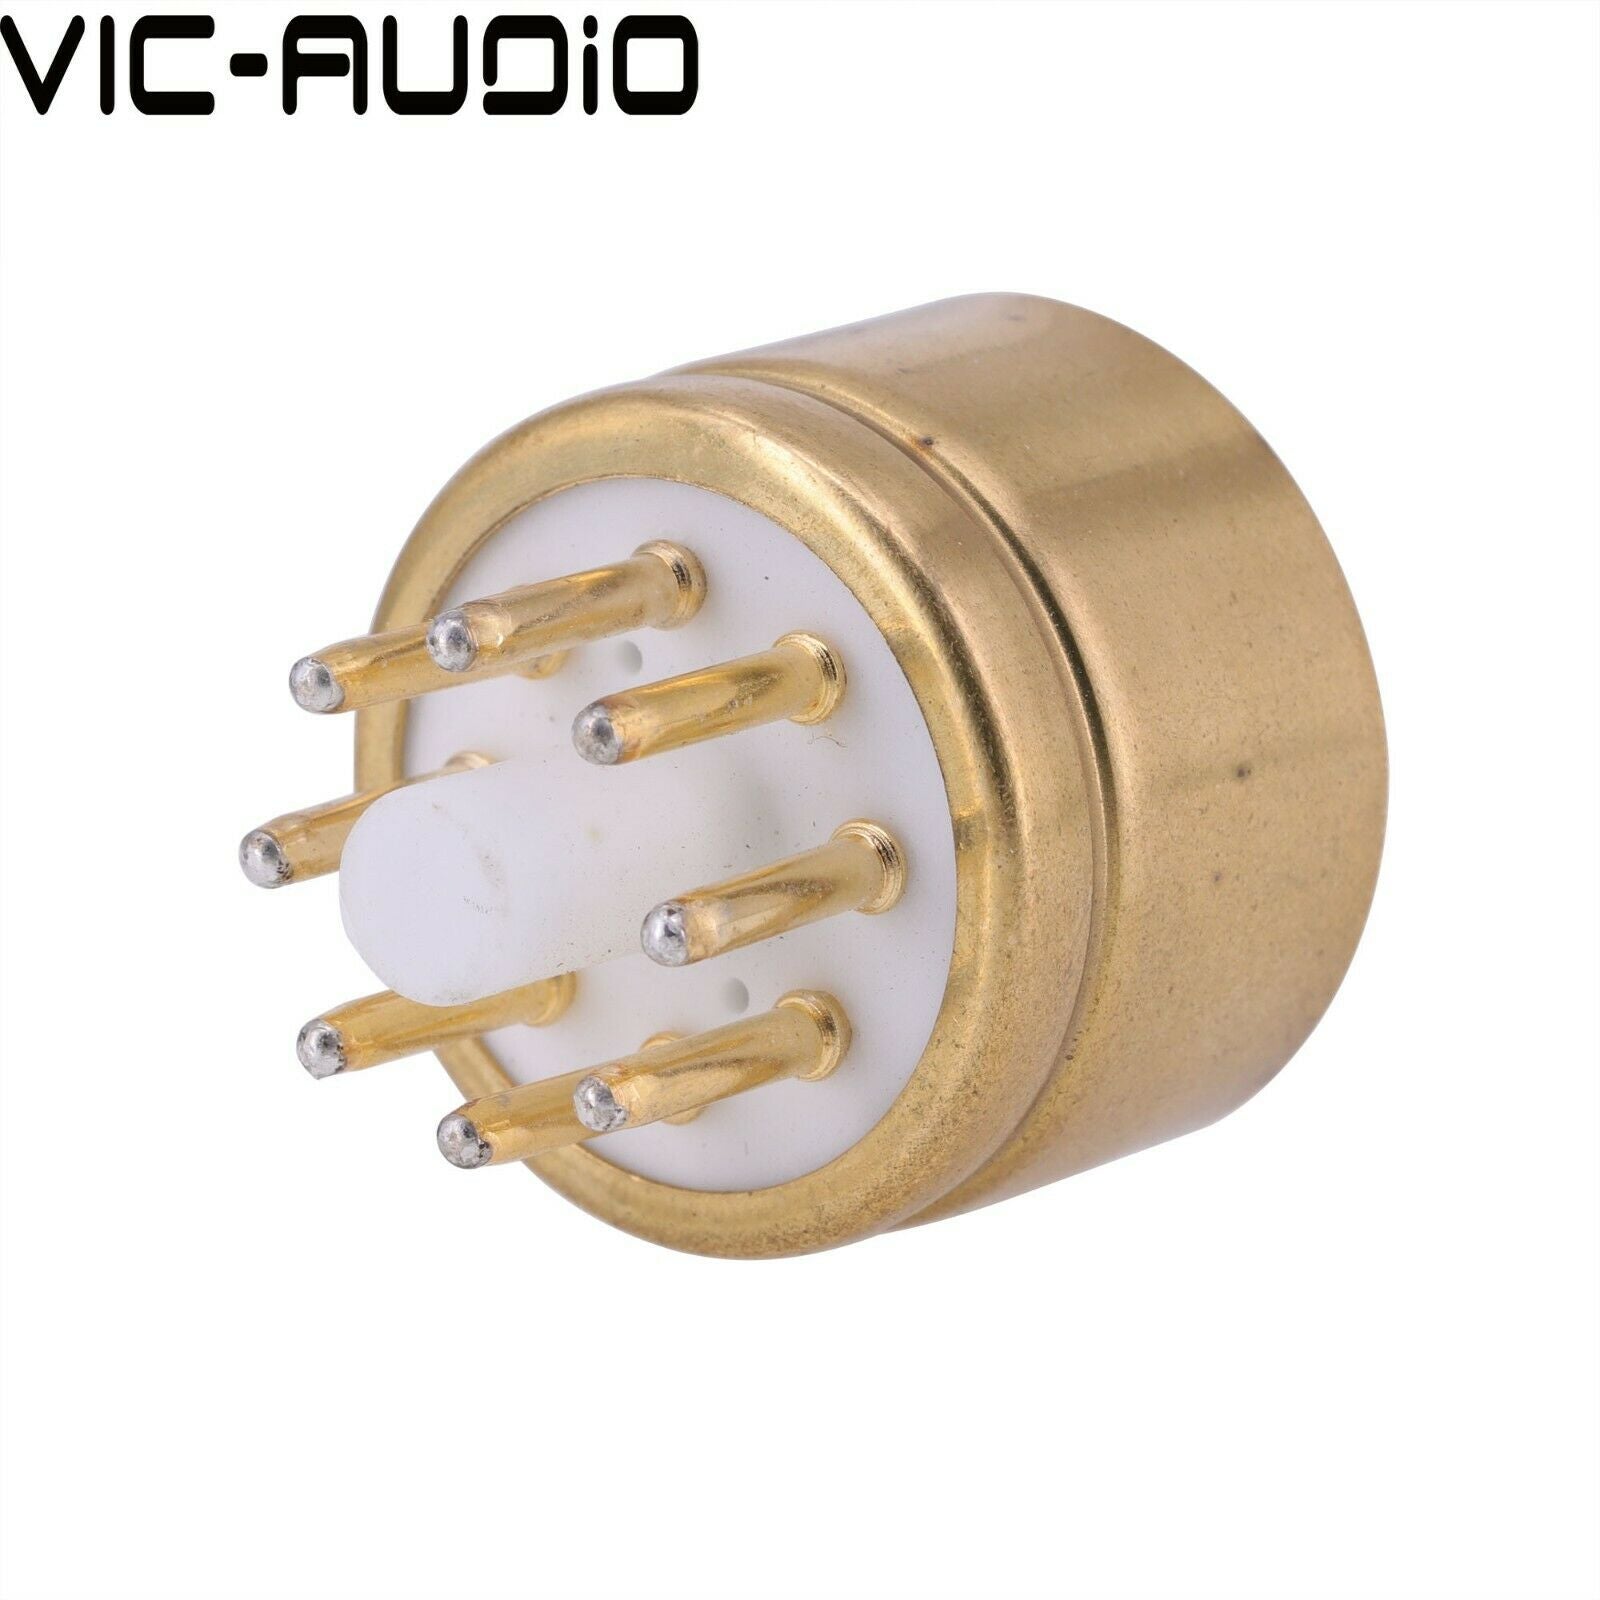 1PC Convert Tube Socket EF86 TO 6SJ7 Vacuum Tube Amplifier Audio Adapter Socket